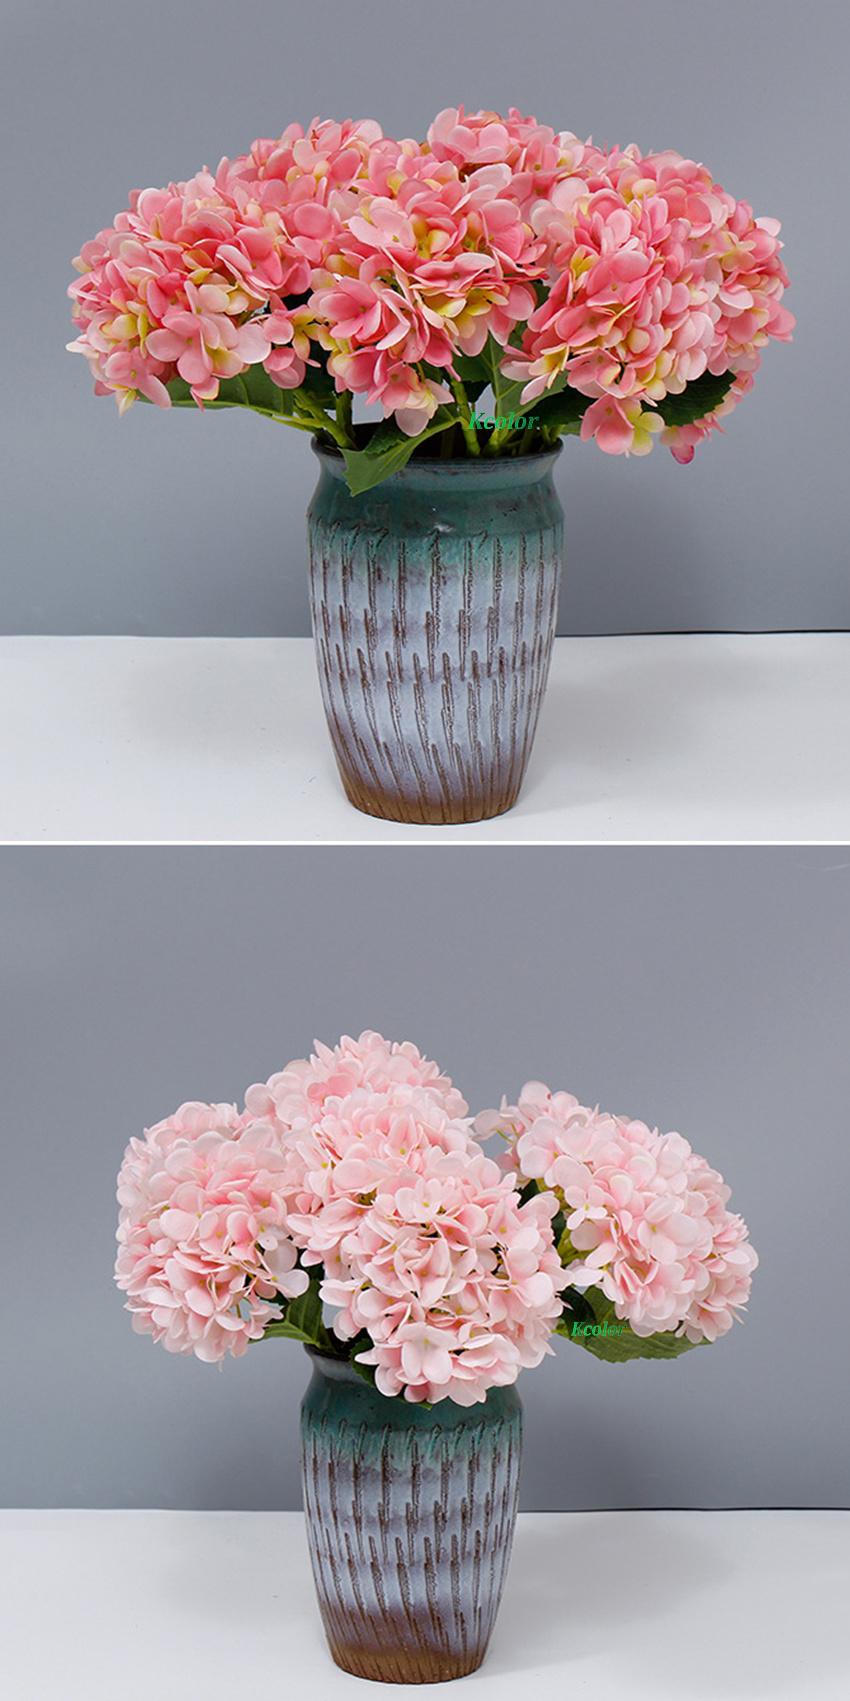 Wholesale Silk Wedding Artificial Flower Hydrangea for Home Decoration